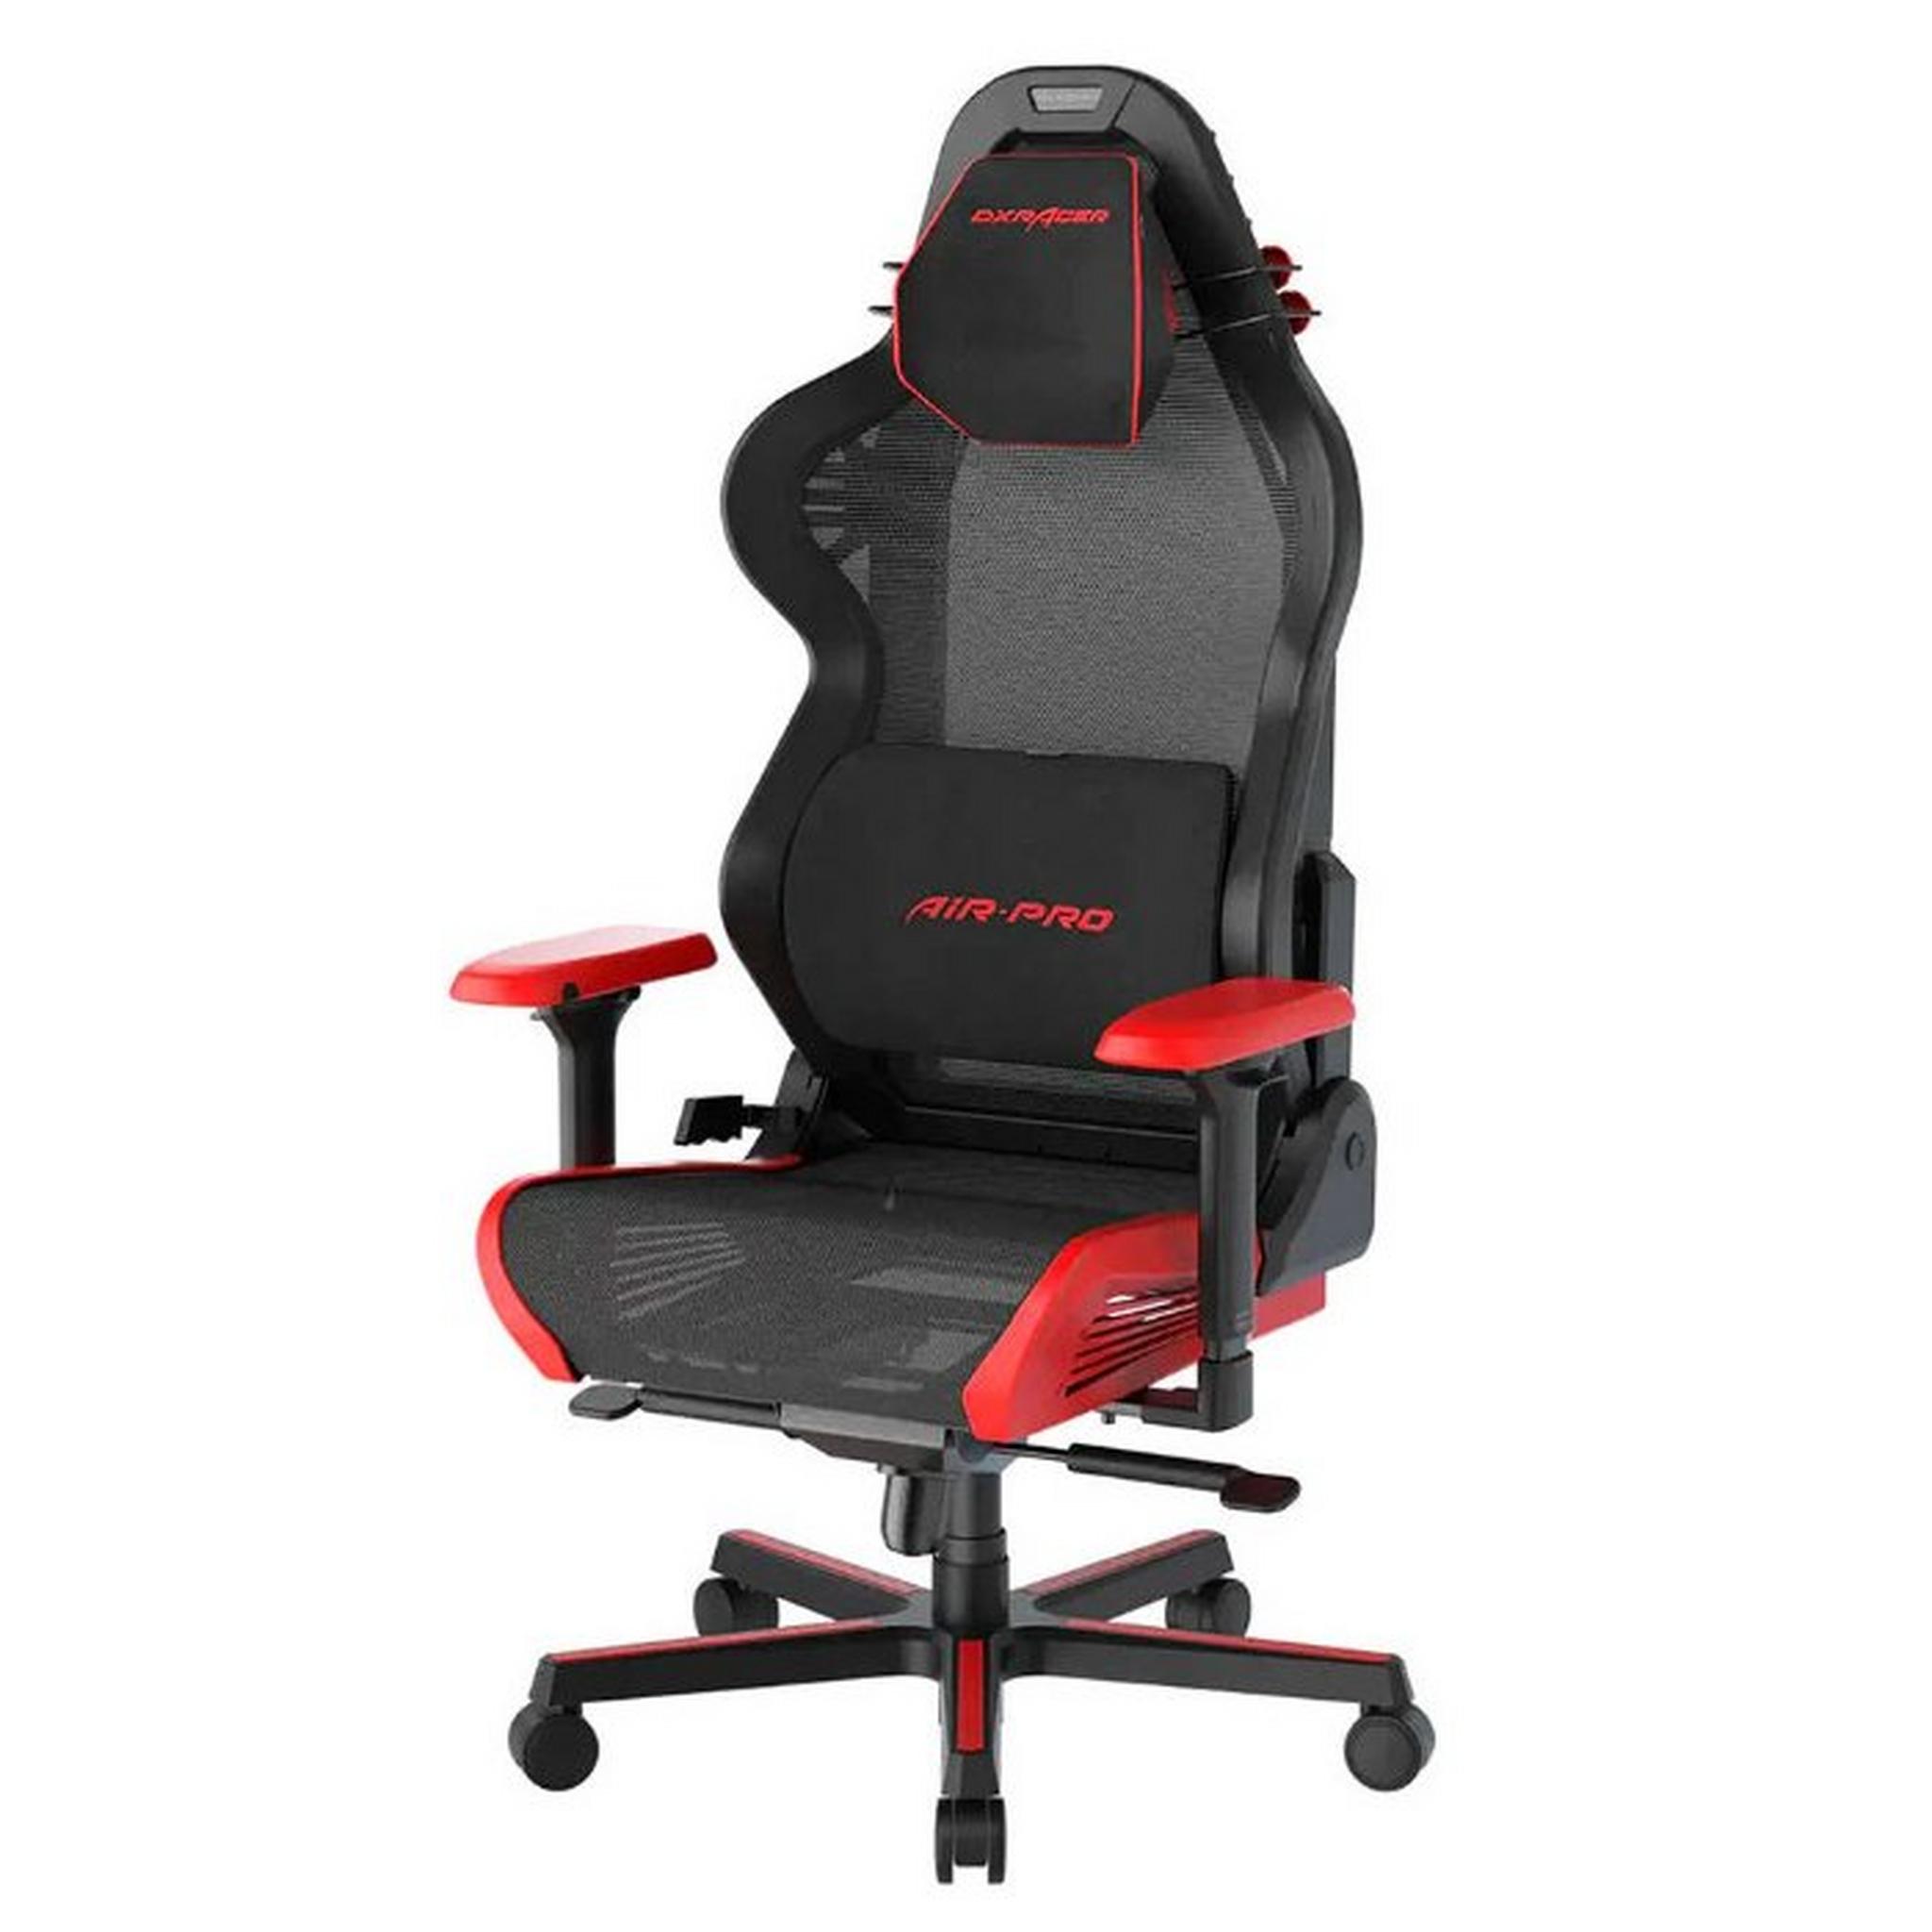 DX Racer Air Pro Series Gaming Chair, AIR-R1S-NR.N-B4 – Black/Red